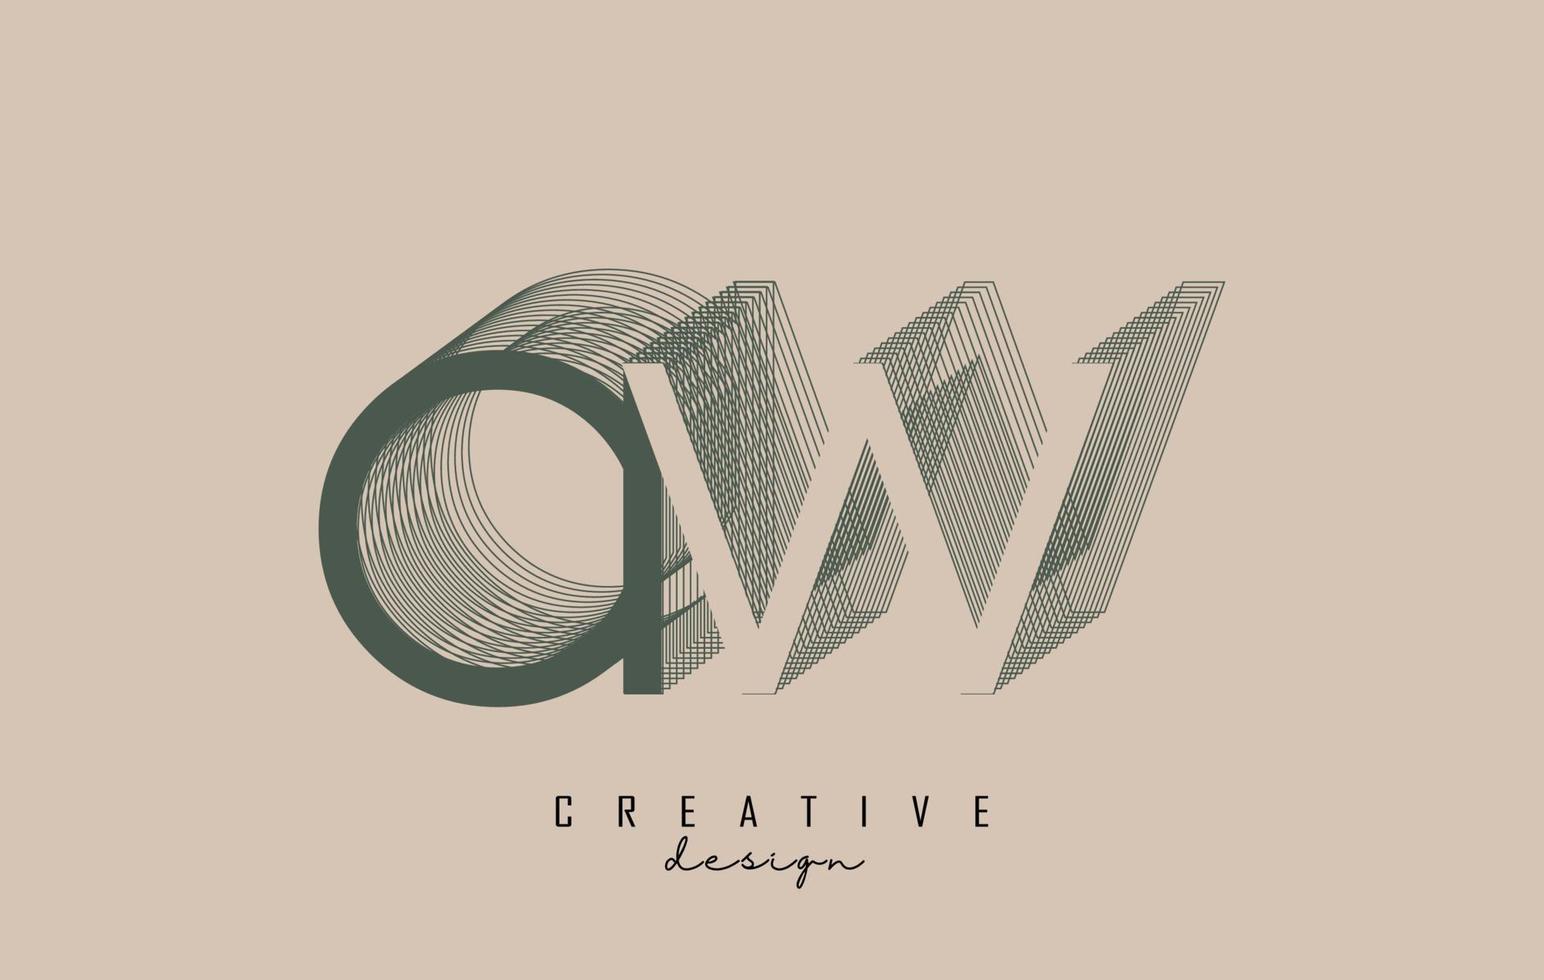 wireframe aw letter logotyp design i två färger. kreativ vektorillustration med trådbunden, speglad konturram. vektor